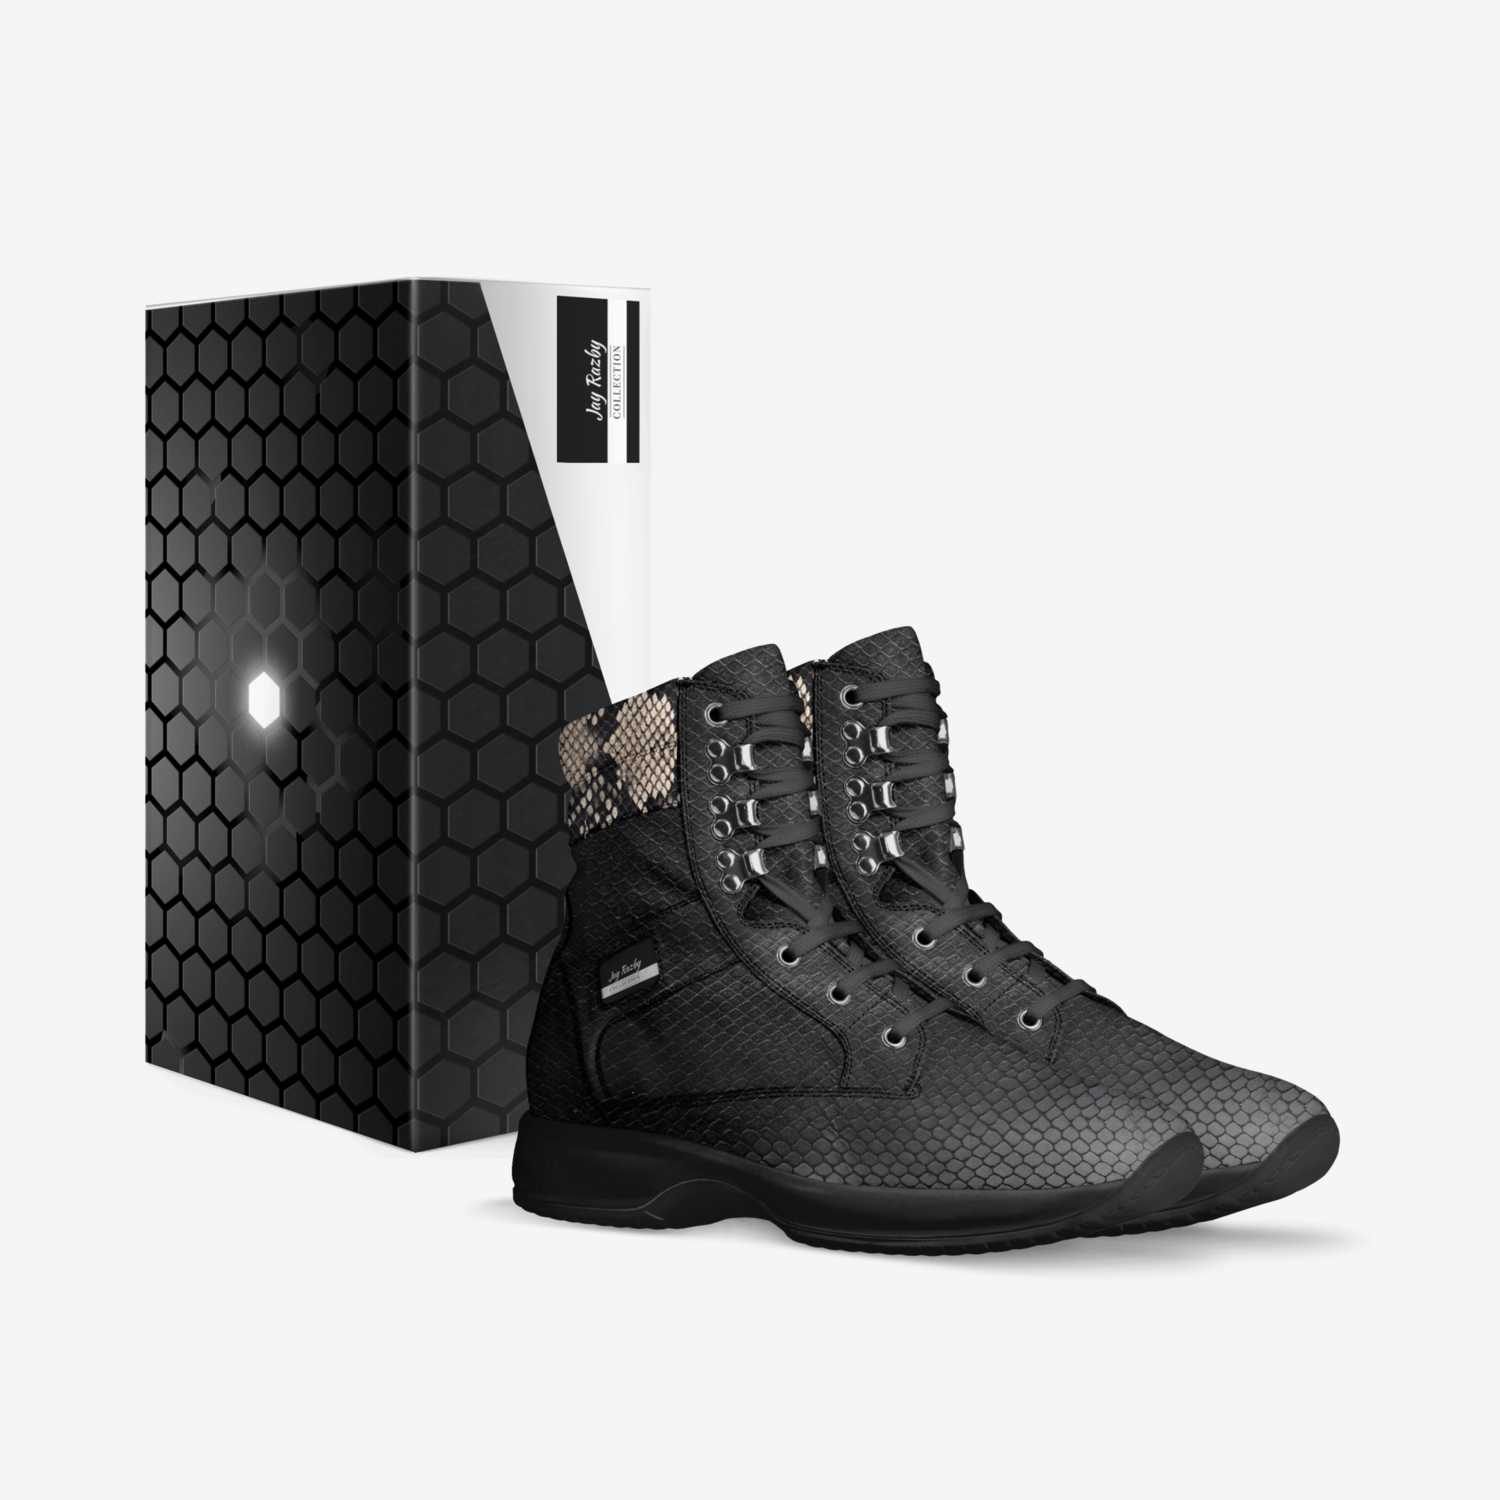 Jay Razby custom made in Italy shoes by Jay Rock | Box view